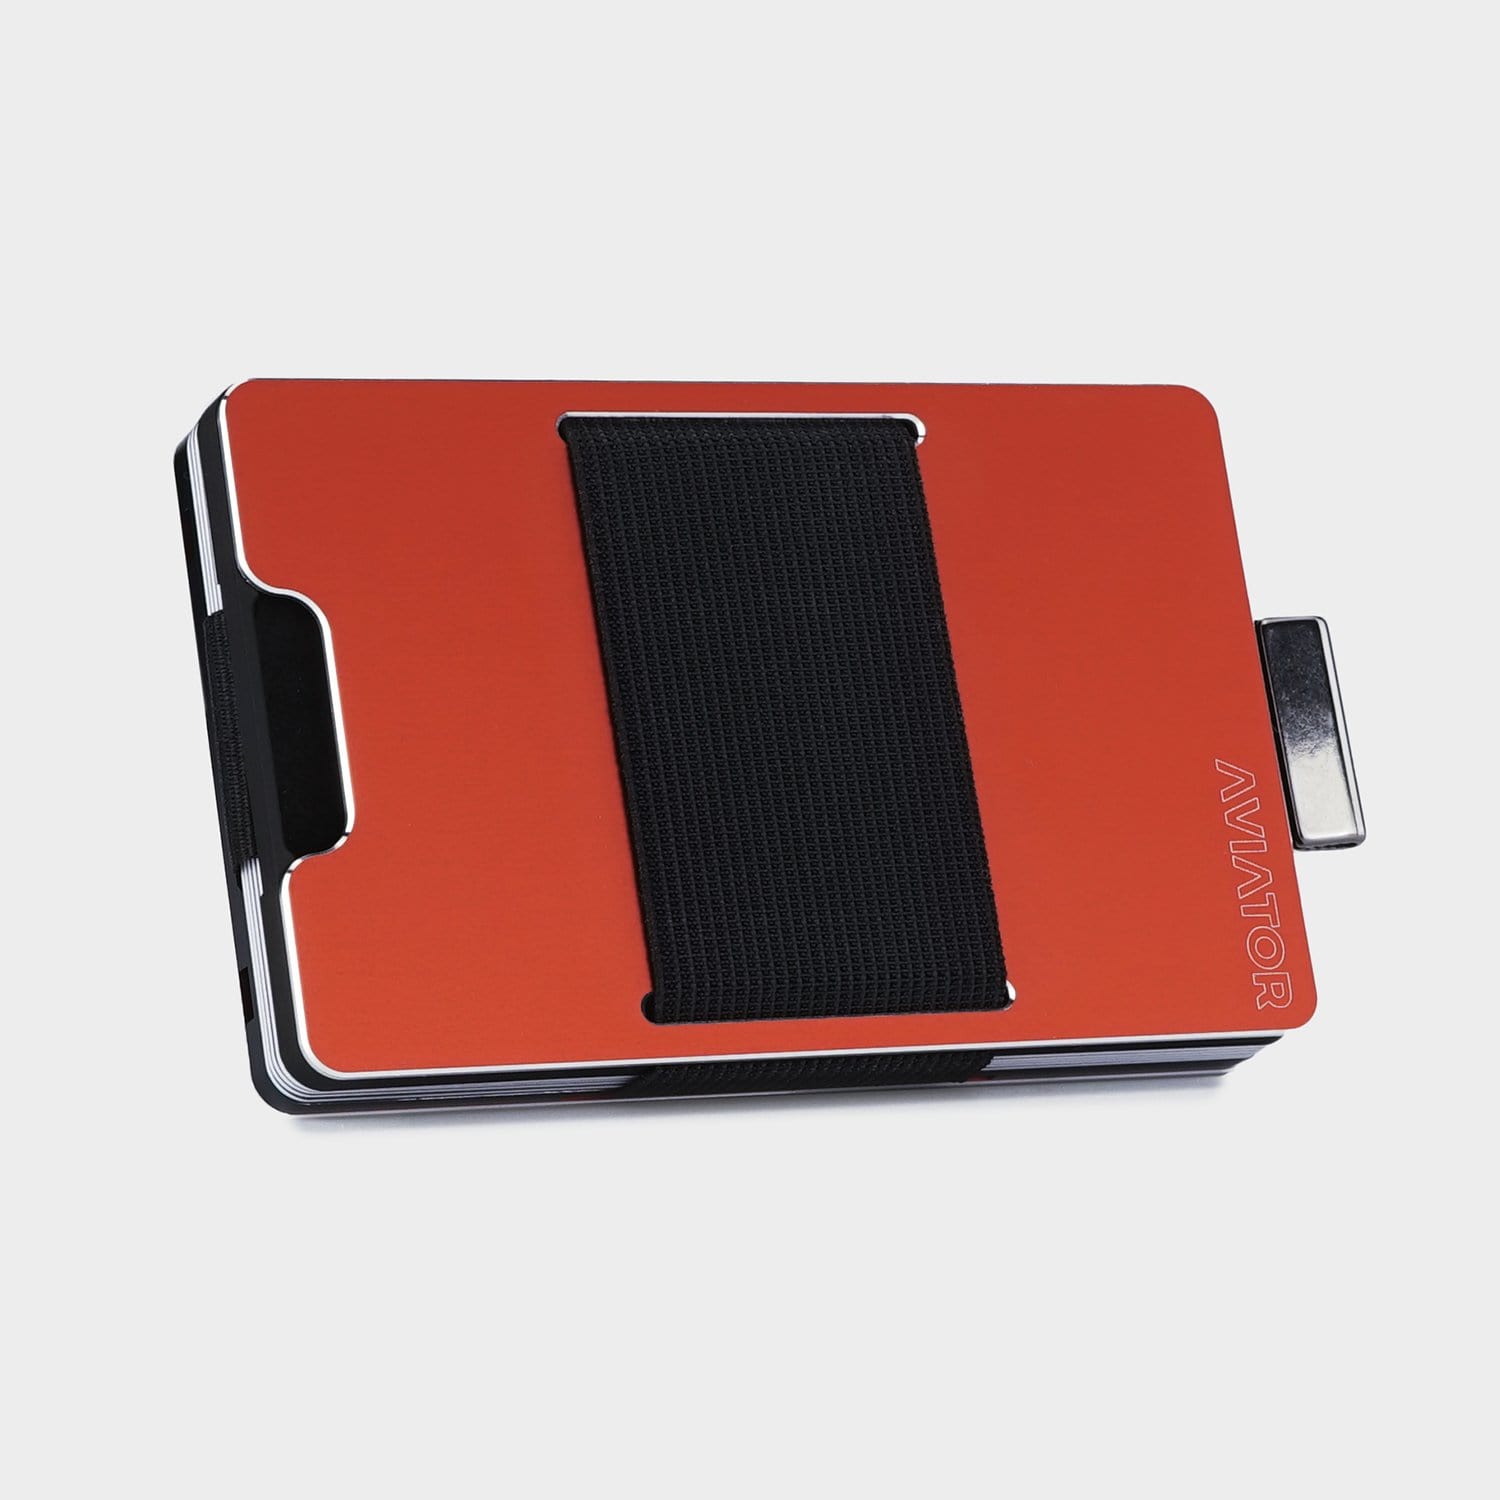 NOT FLAW[LESS] Imola Red Aluminium Slim Wallet